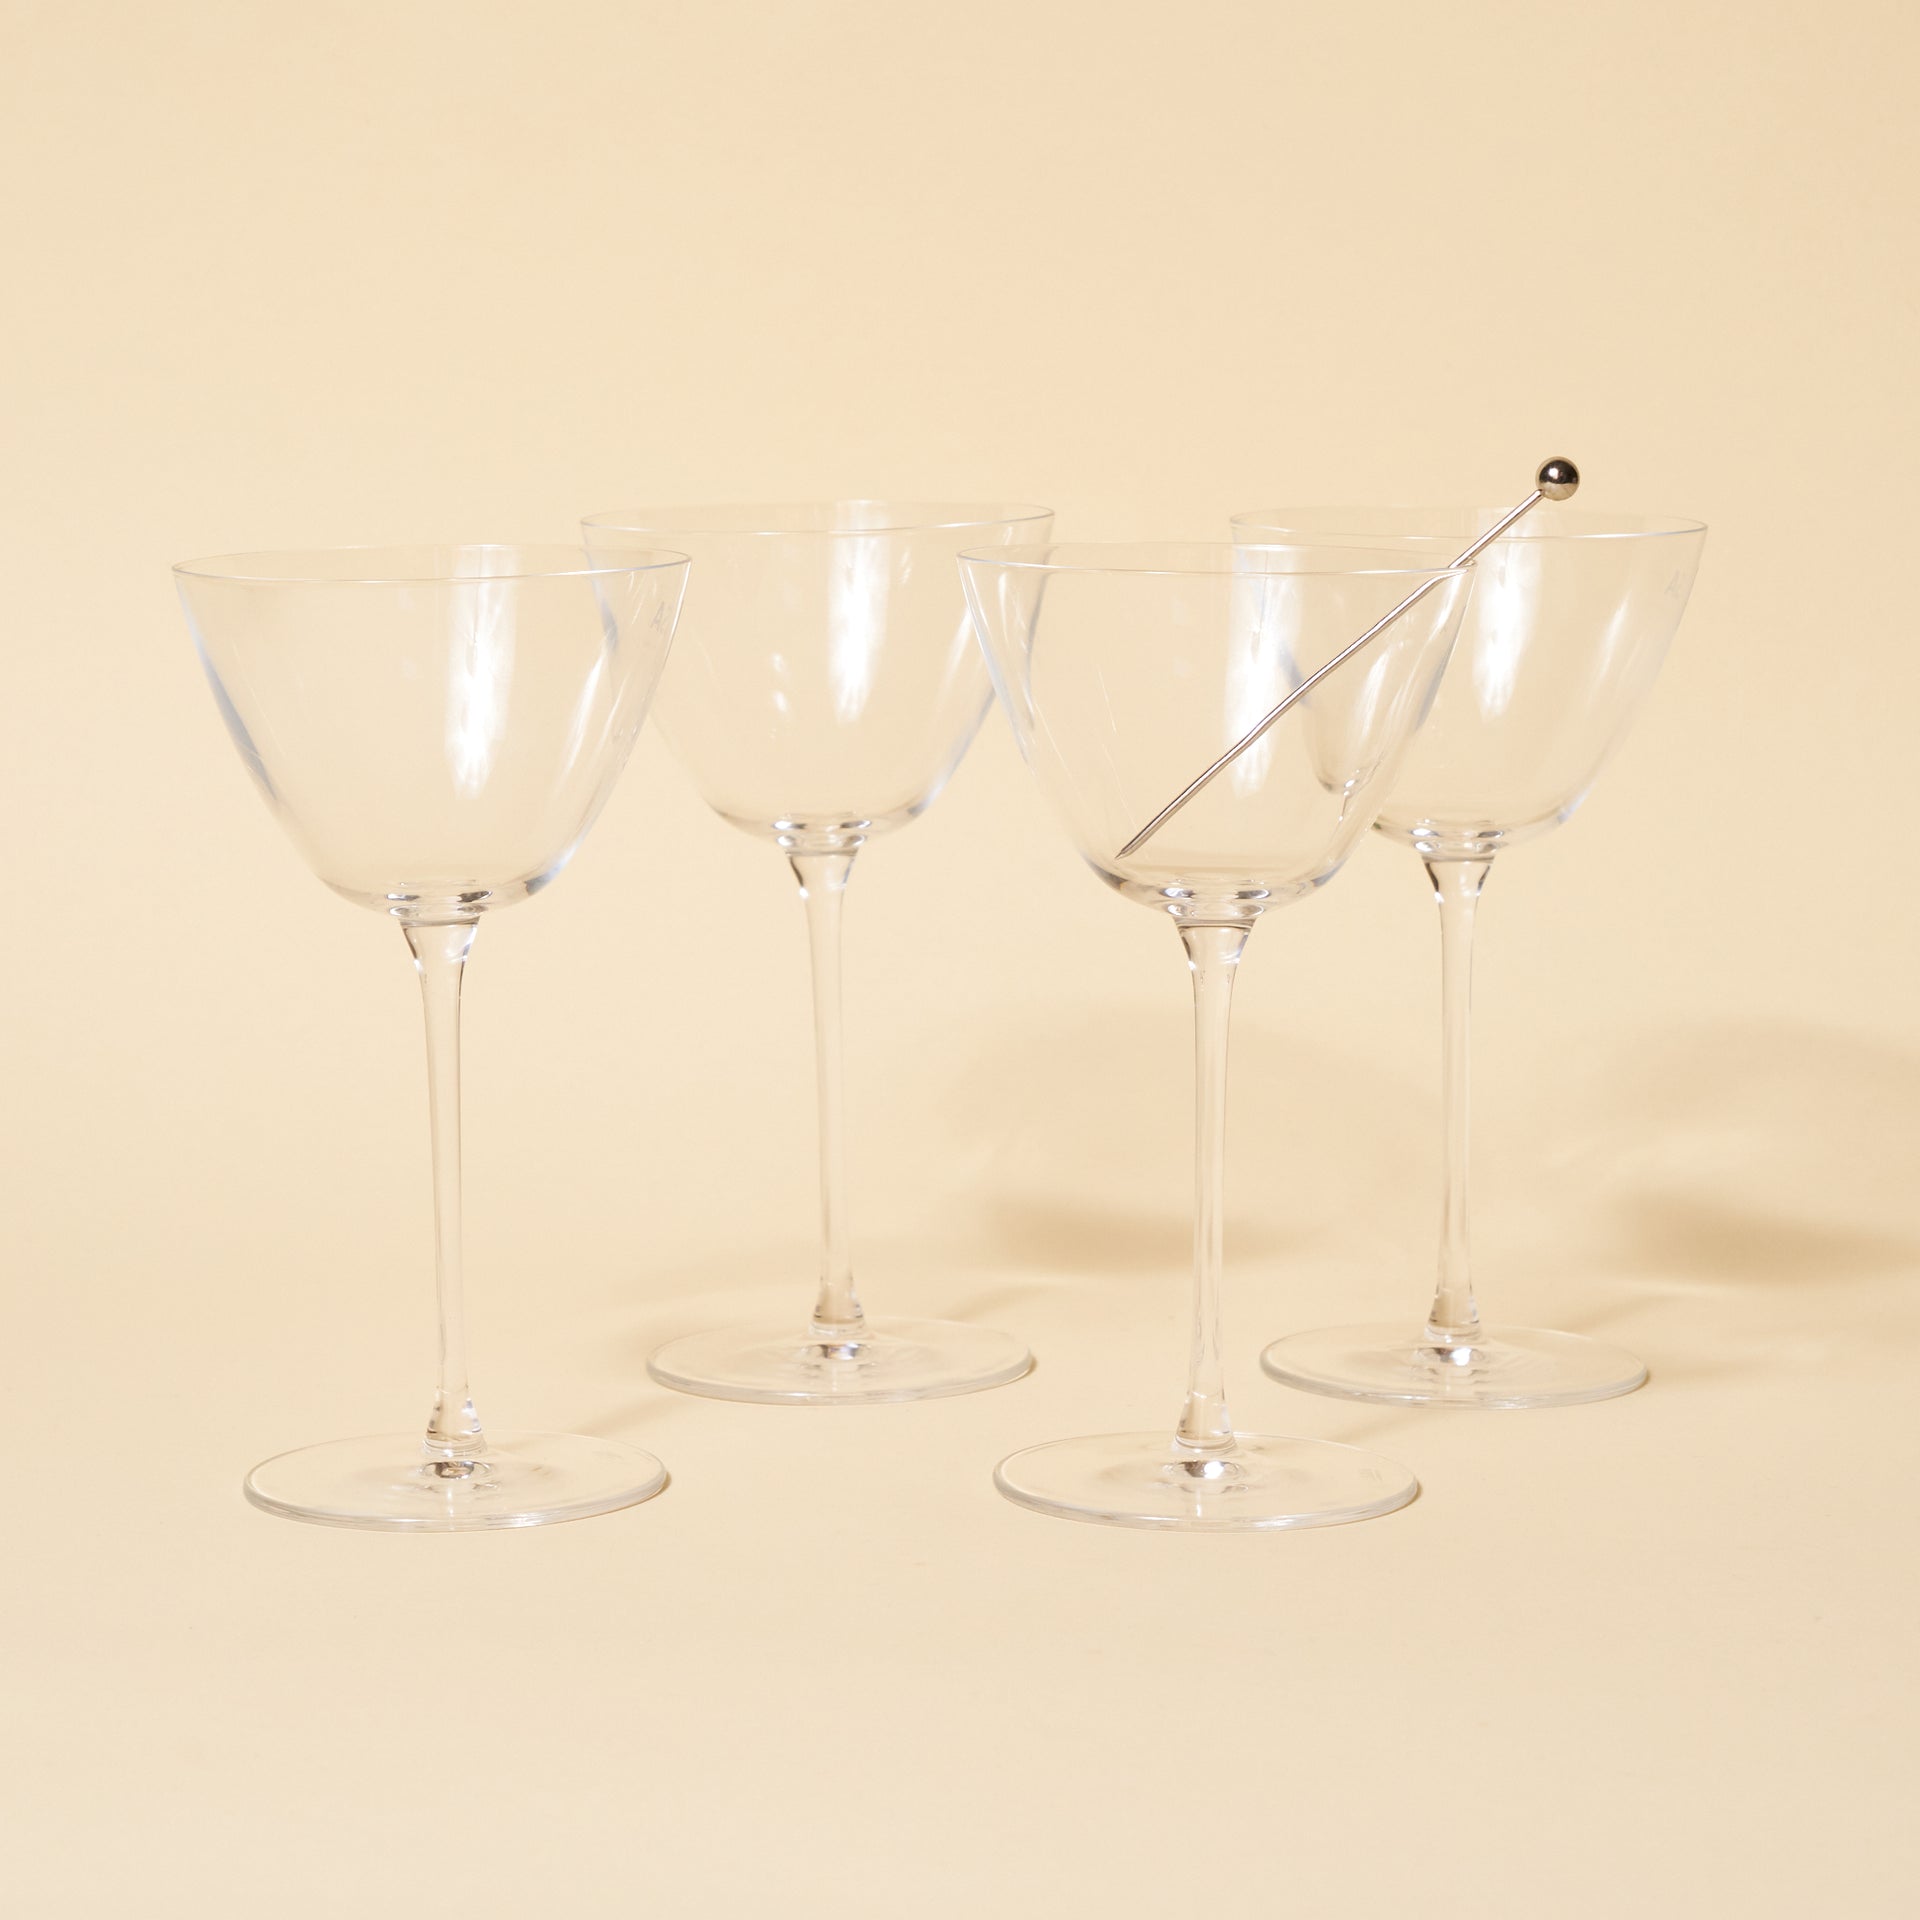 Classic Martini Glasses Set of 4 - World Market